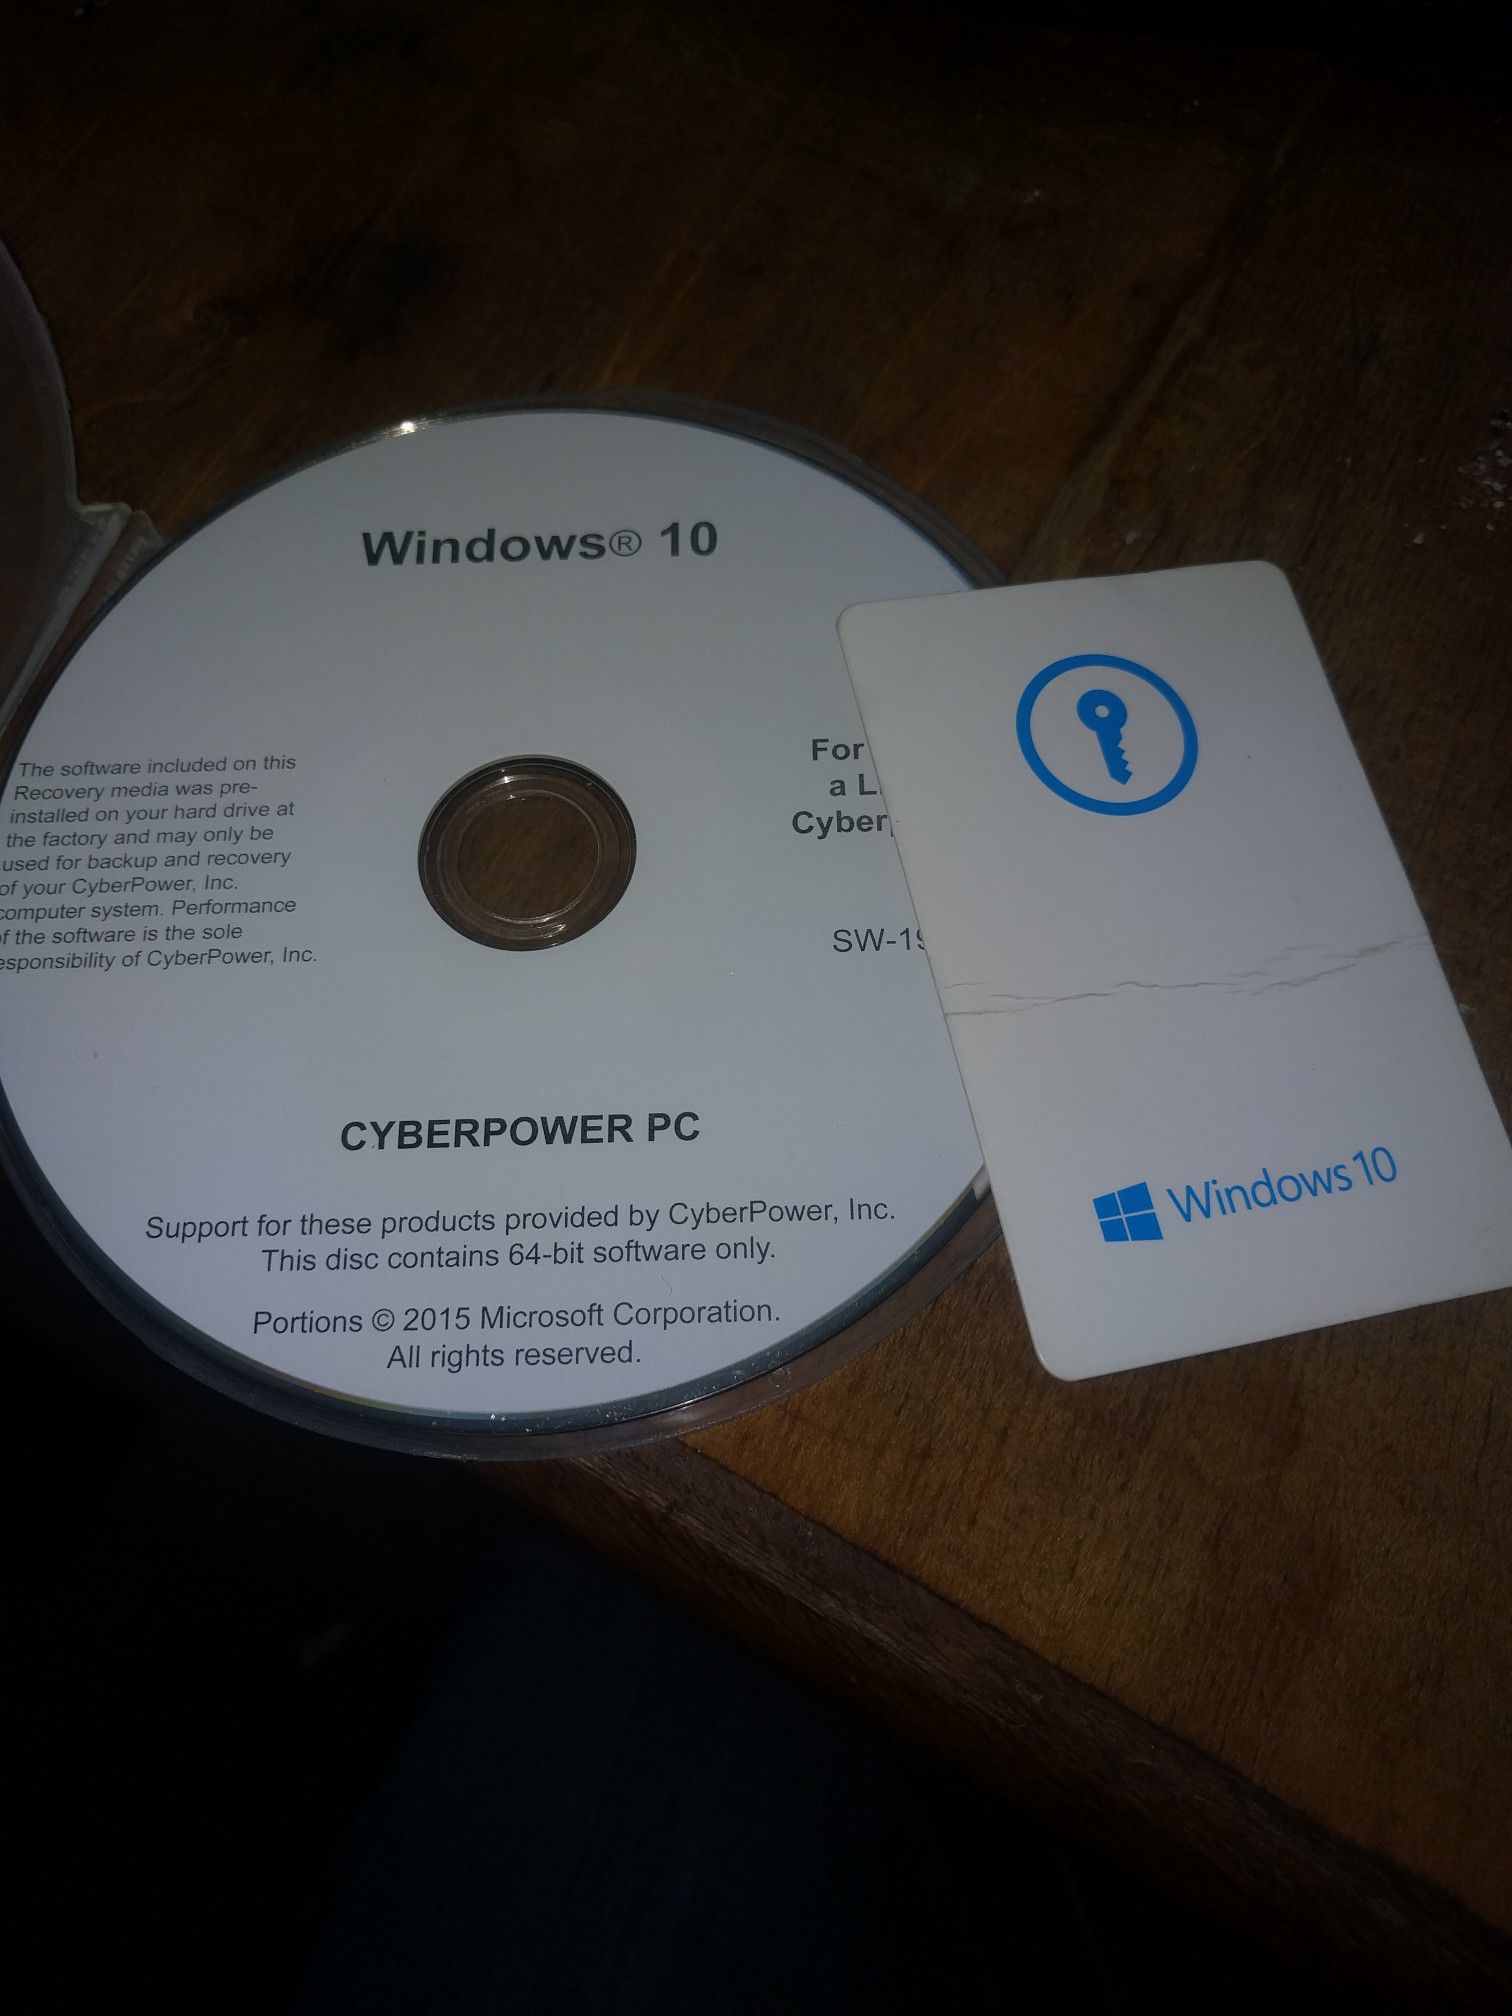 Windows 10 home 64-bit